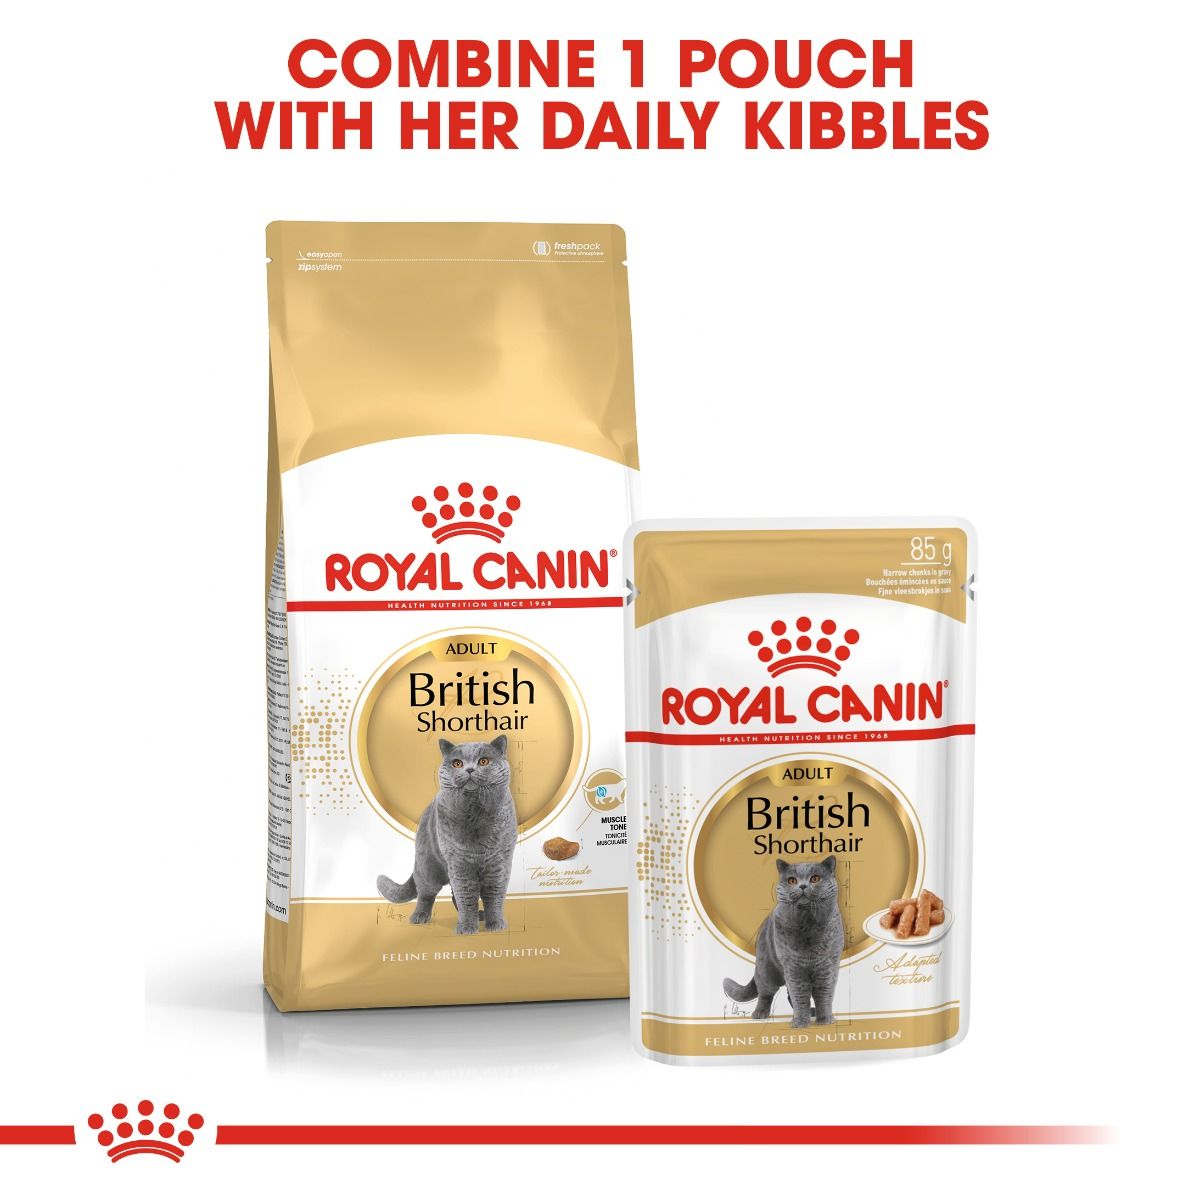 Royal Canin British Shorthair wet food gravy